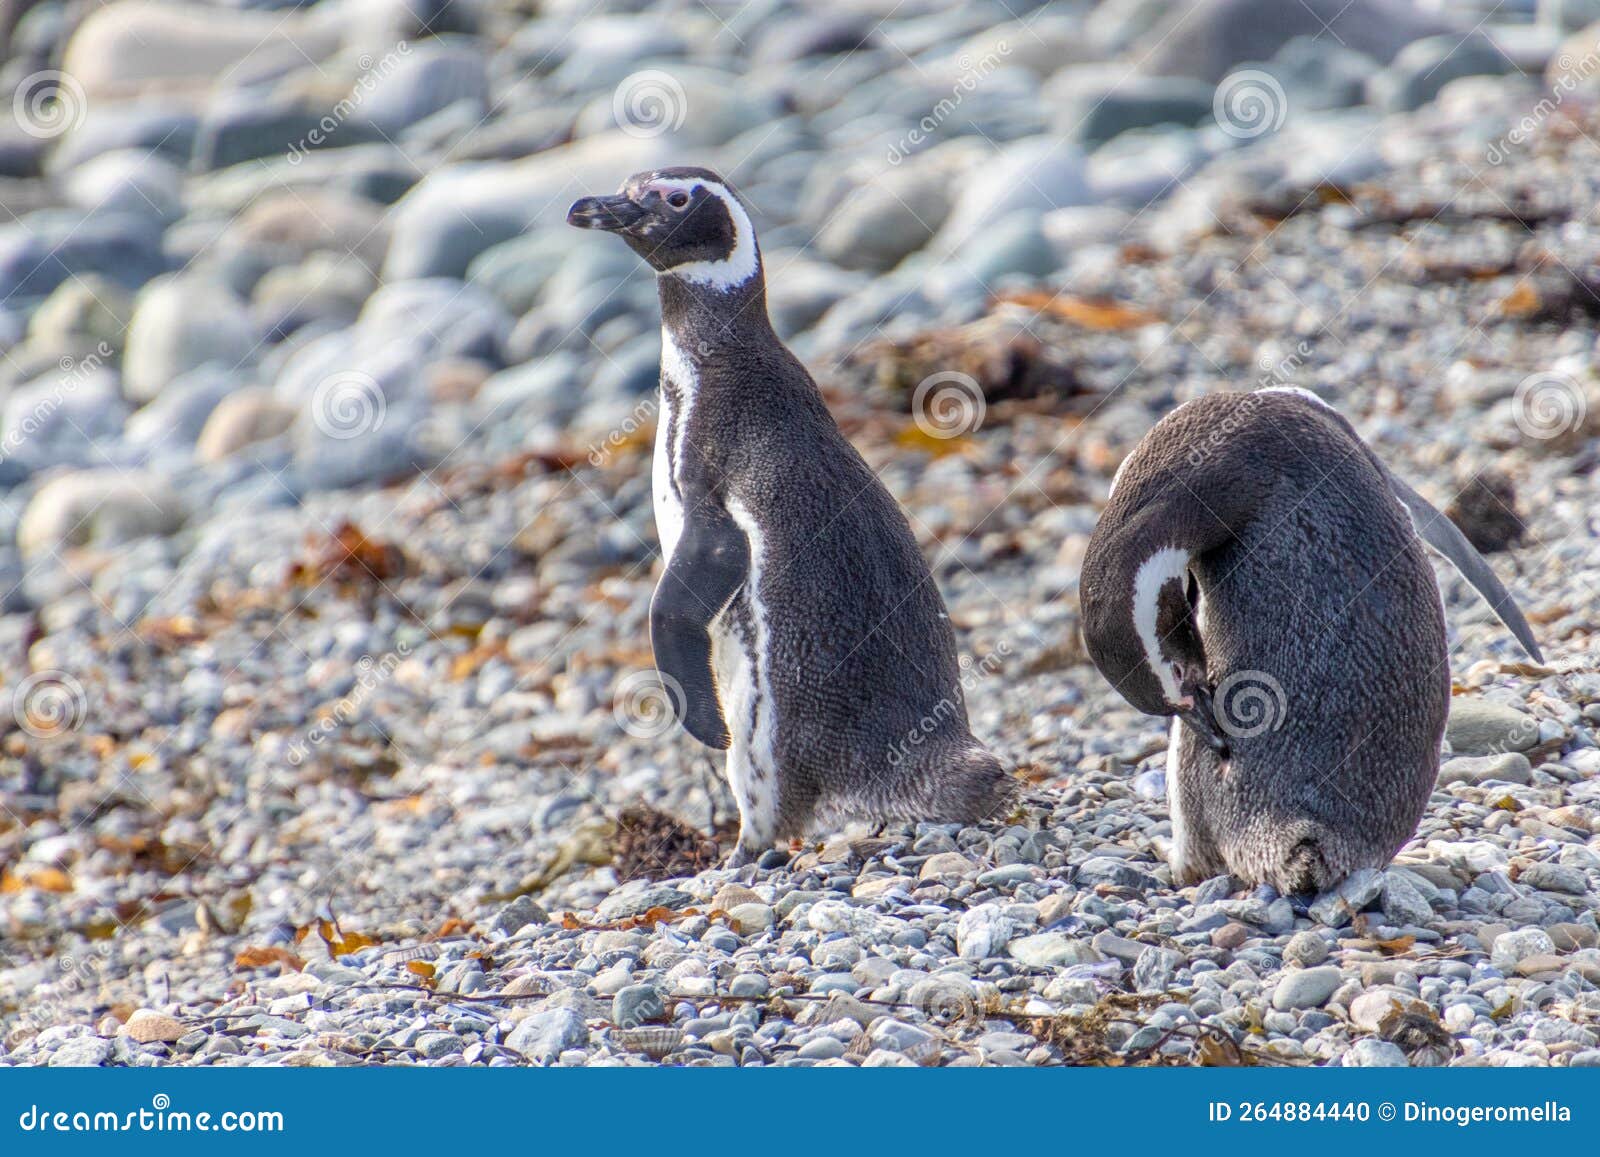 couple of penguins chiean anctartica